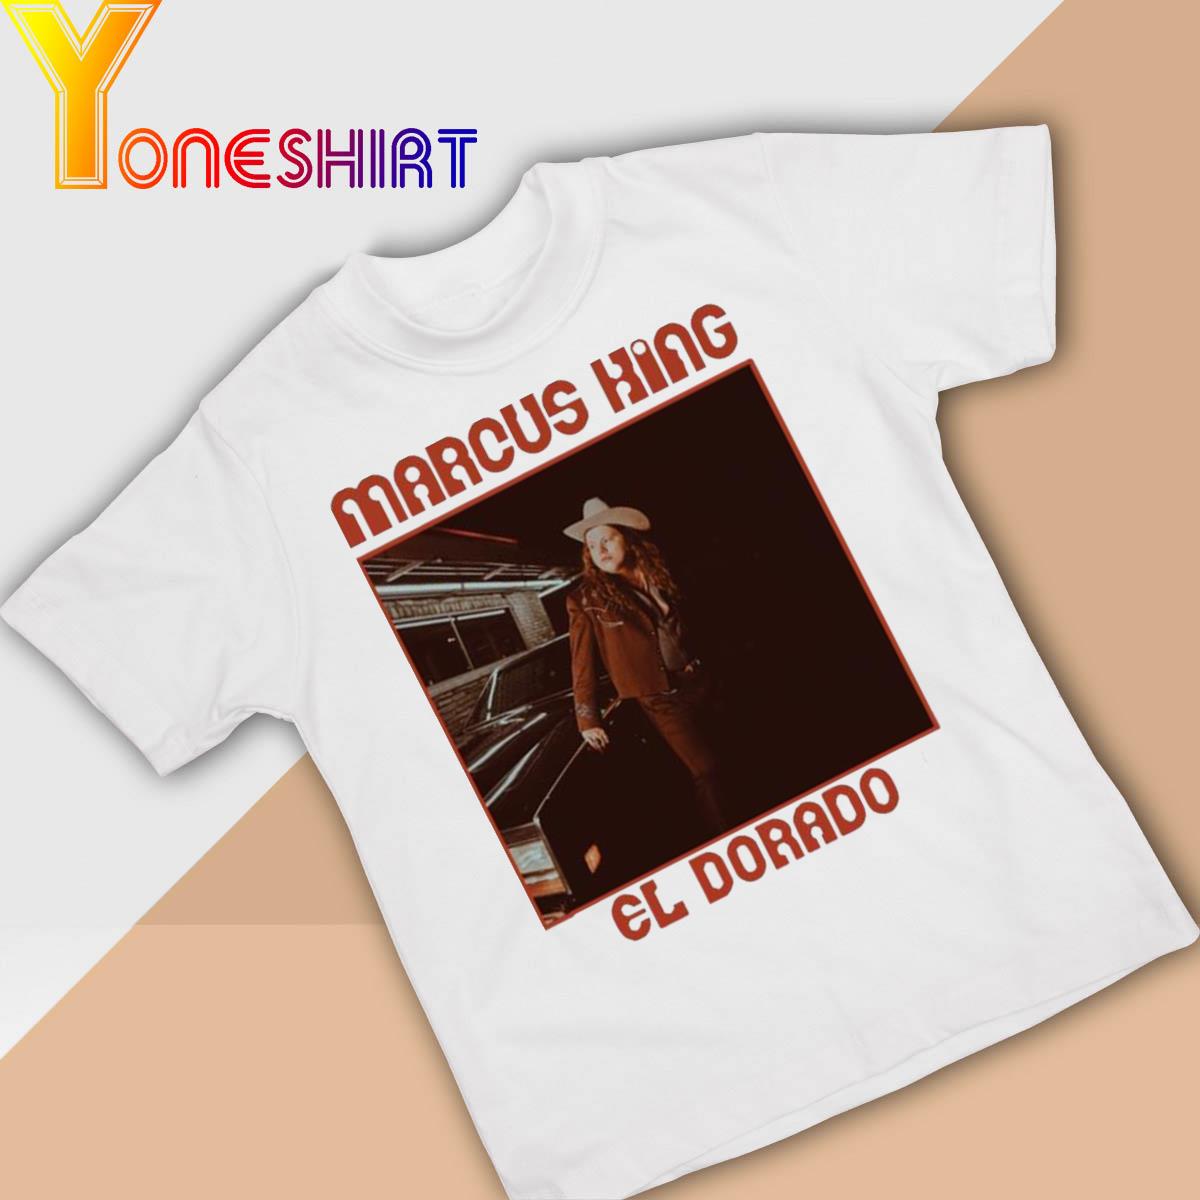 The Marcus King Band El Dorado shirt